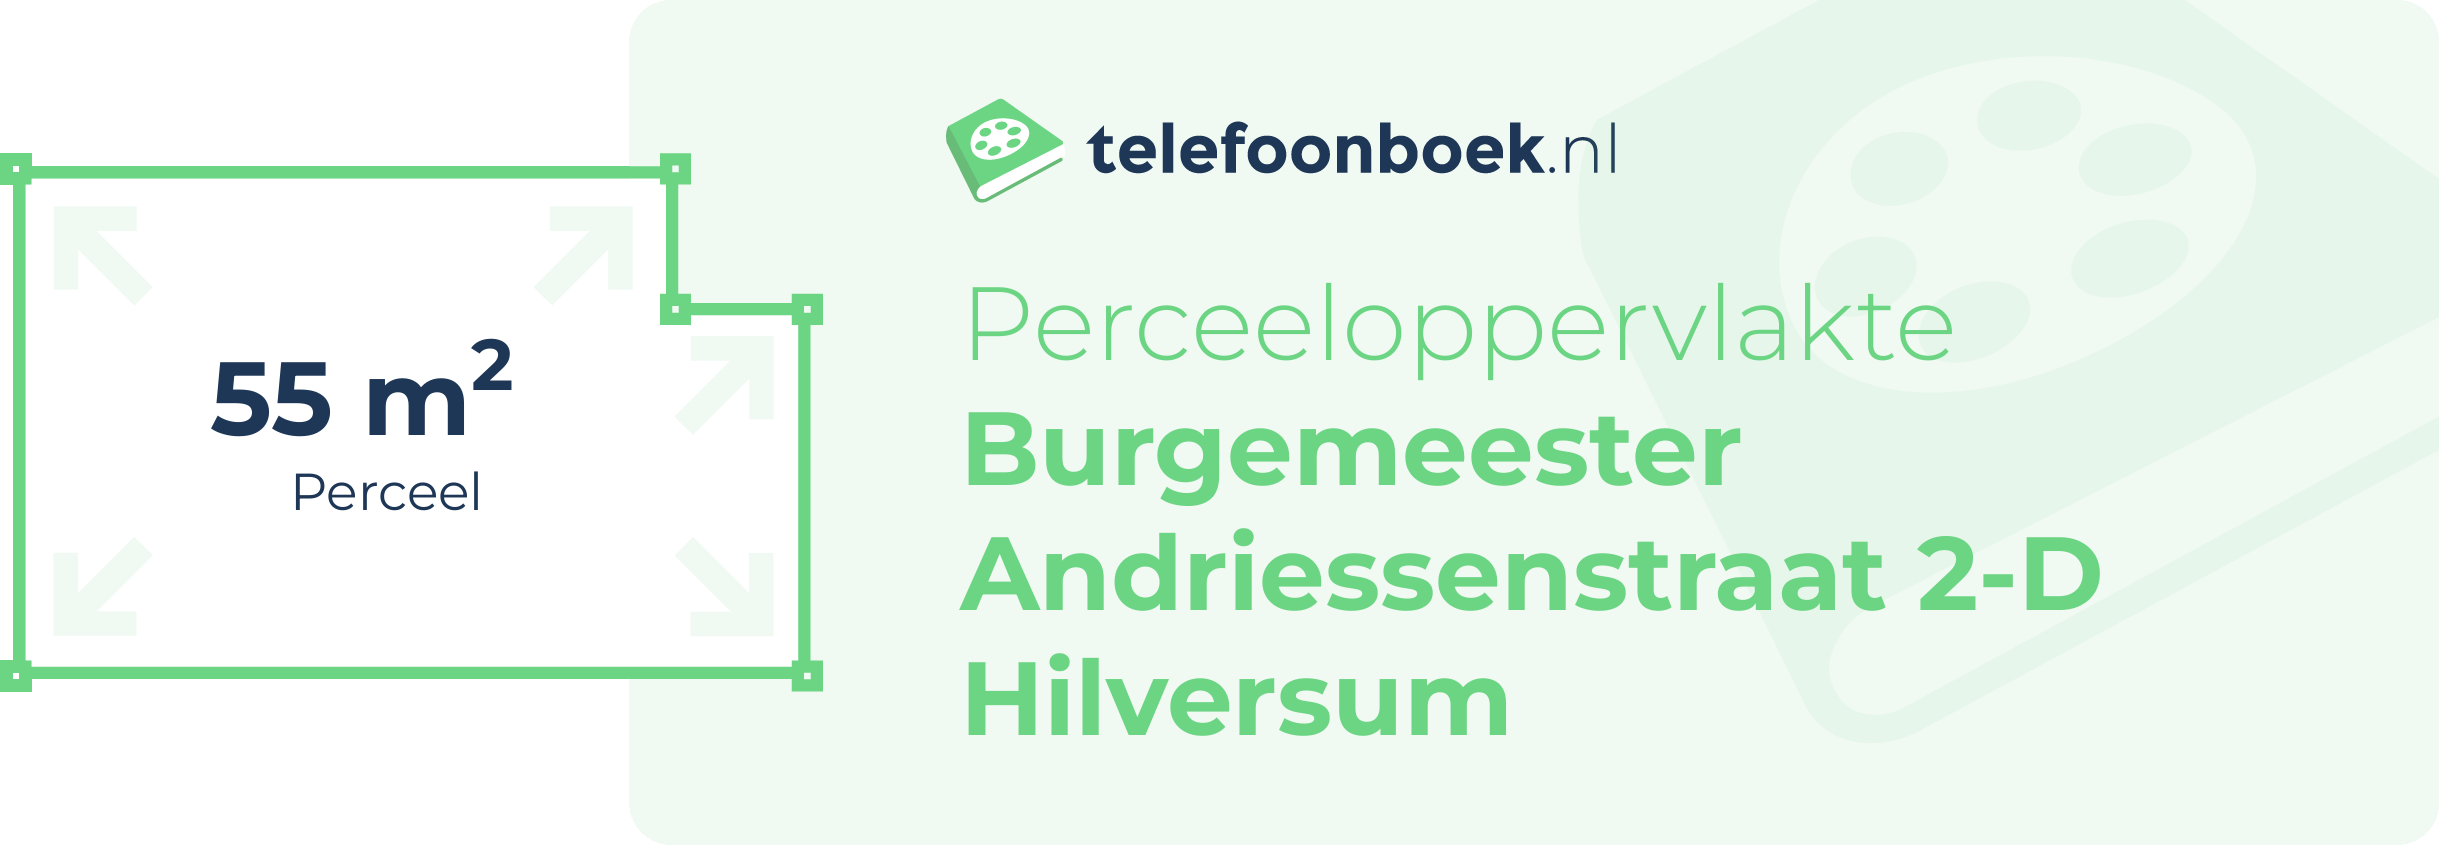 Perceeloppervlakte Burgemeester Andriessenstraat 2-D Hilversum